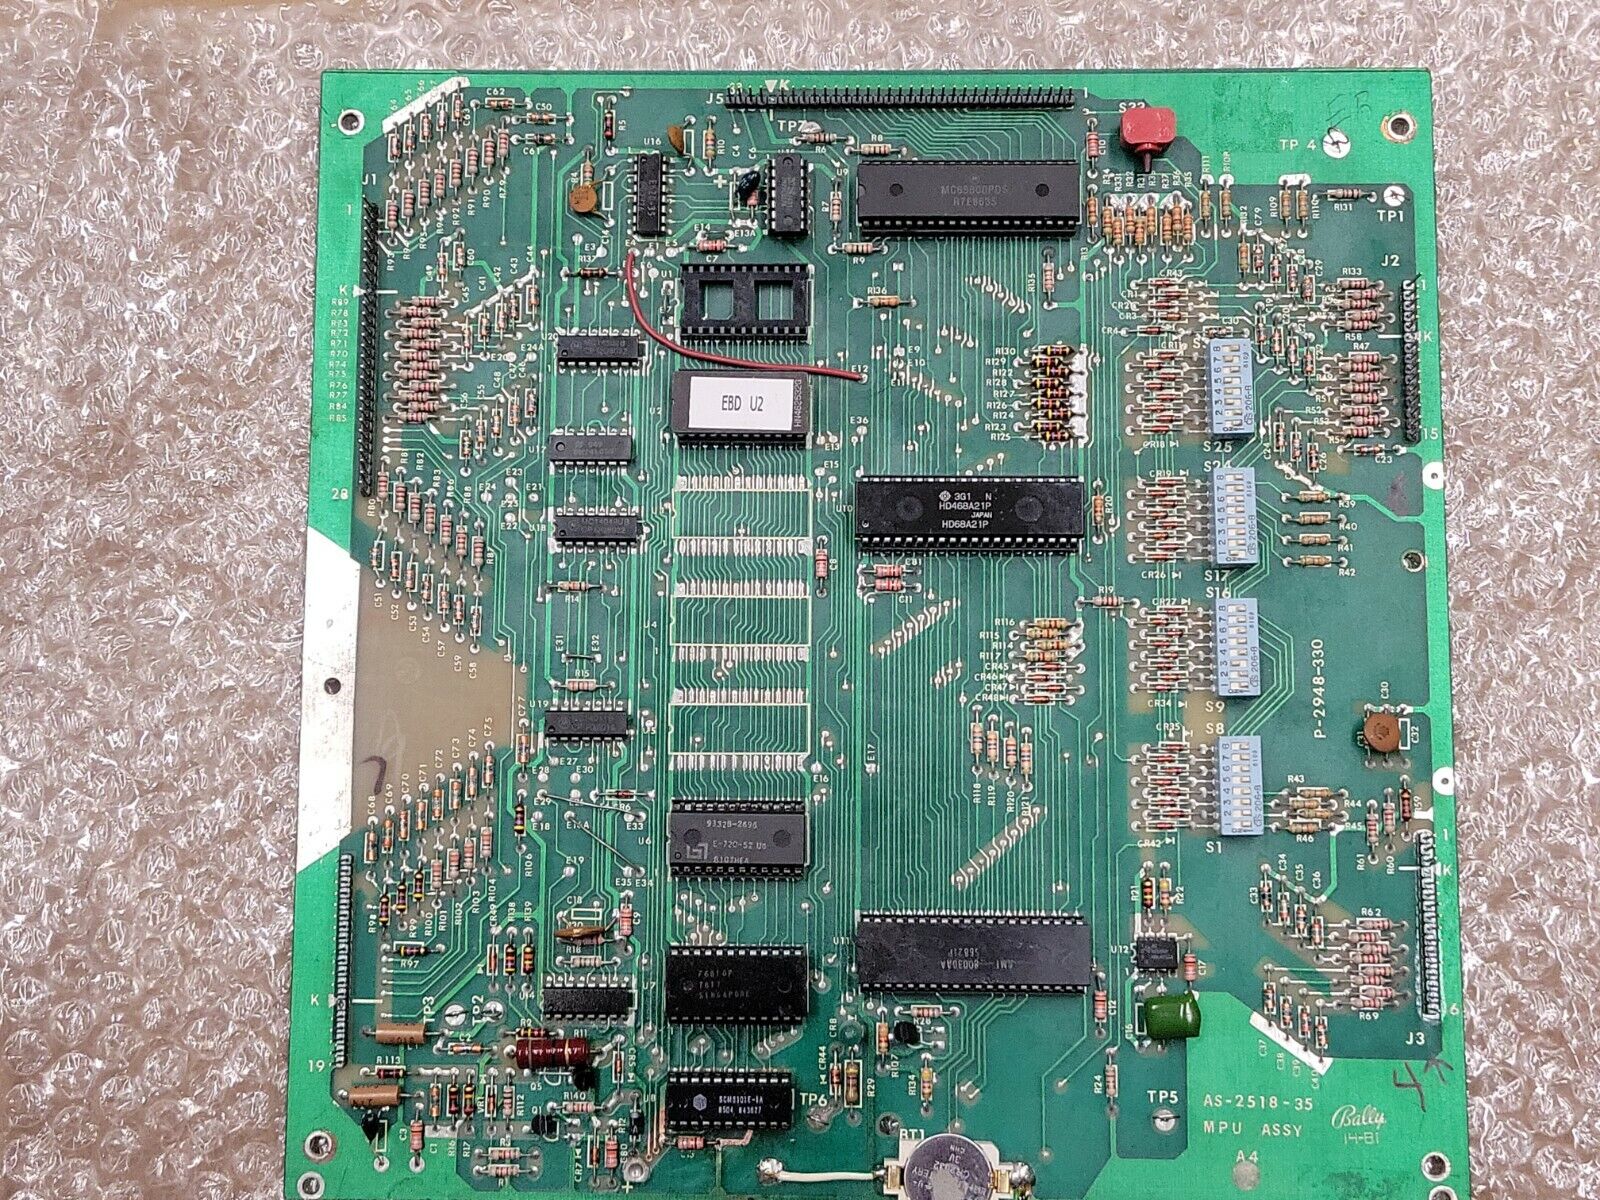 Bally Stern AS-2518-35 Pinball MPU CPU Board USED UNTESTED